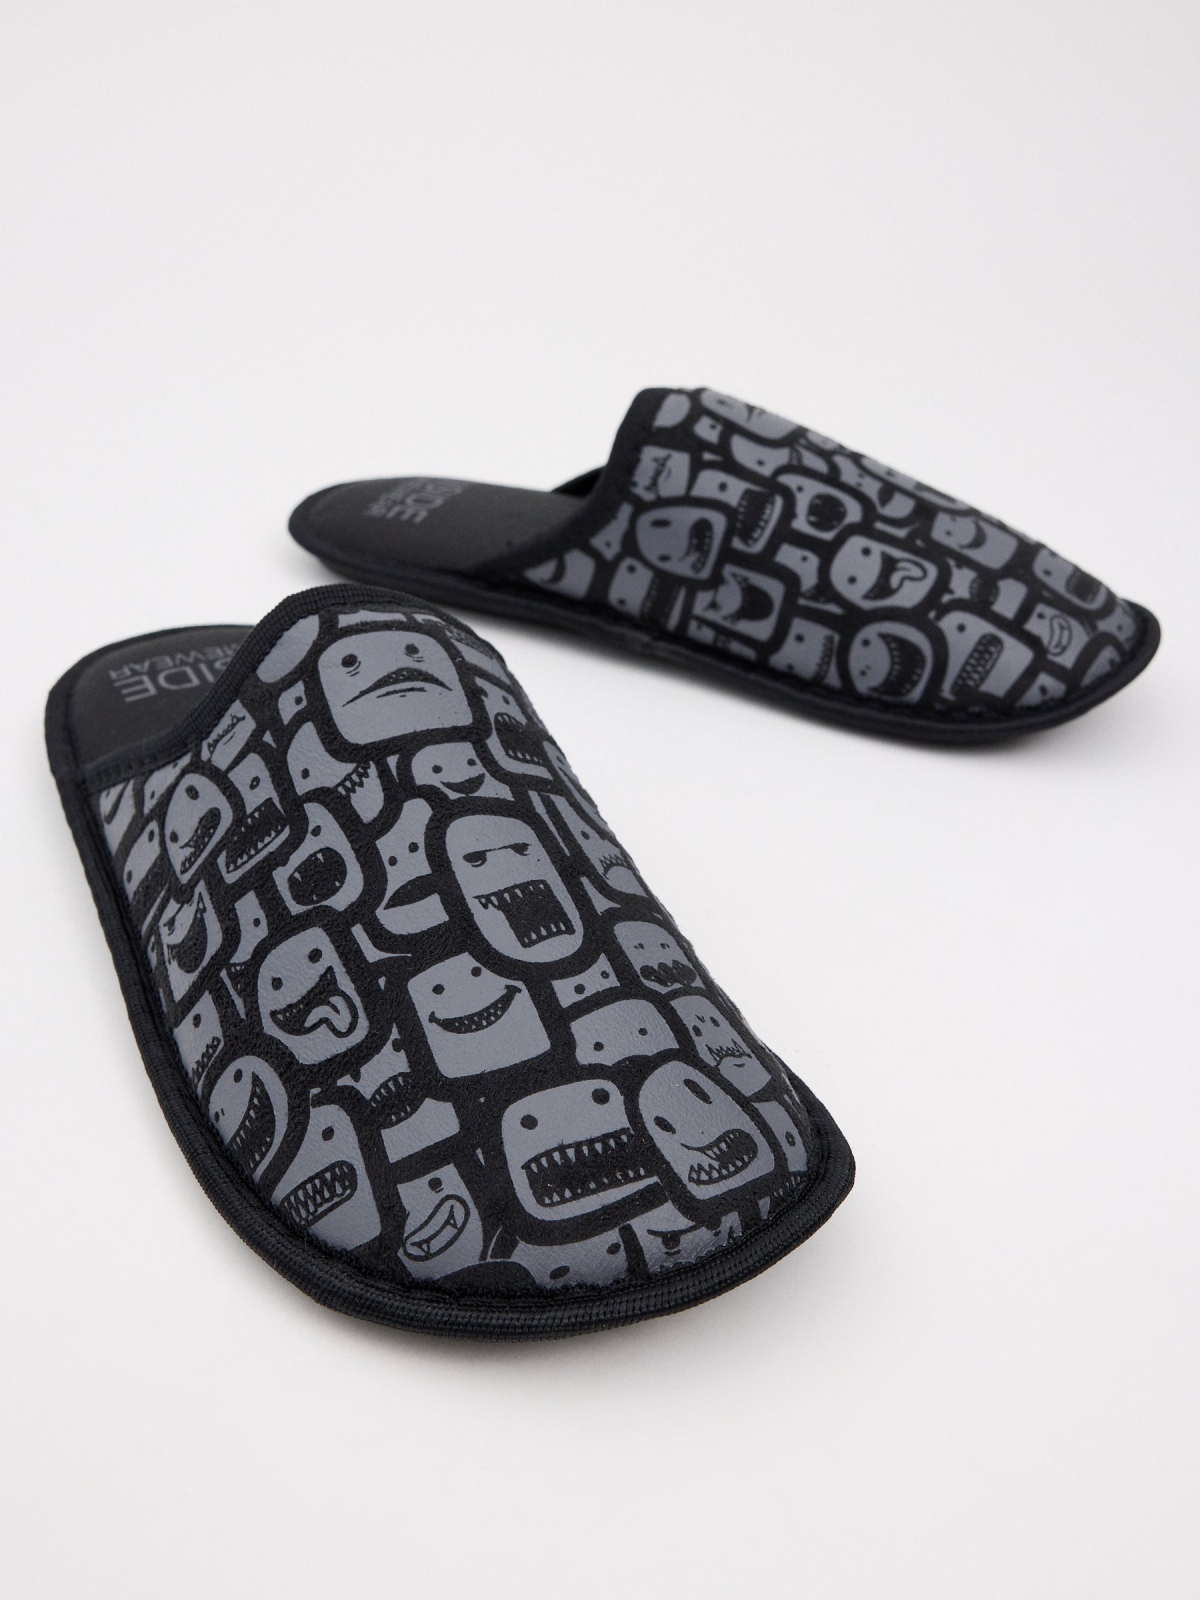 Printed slippers black detail view